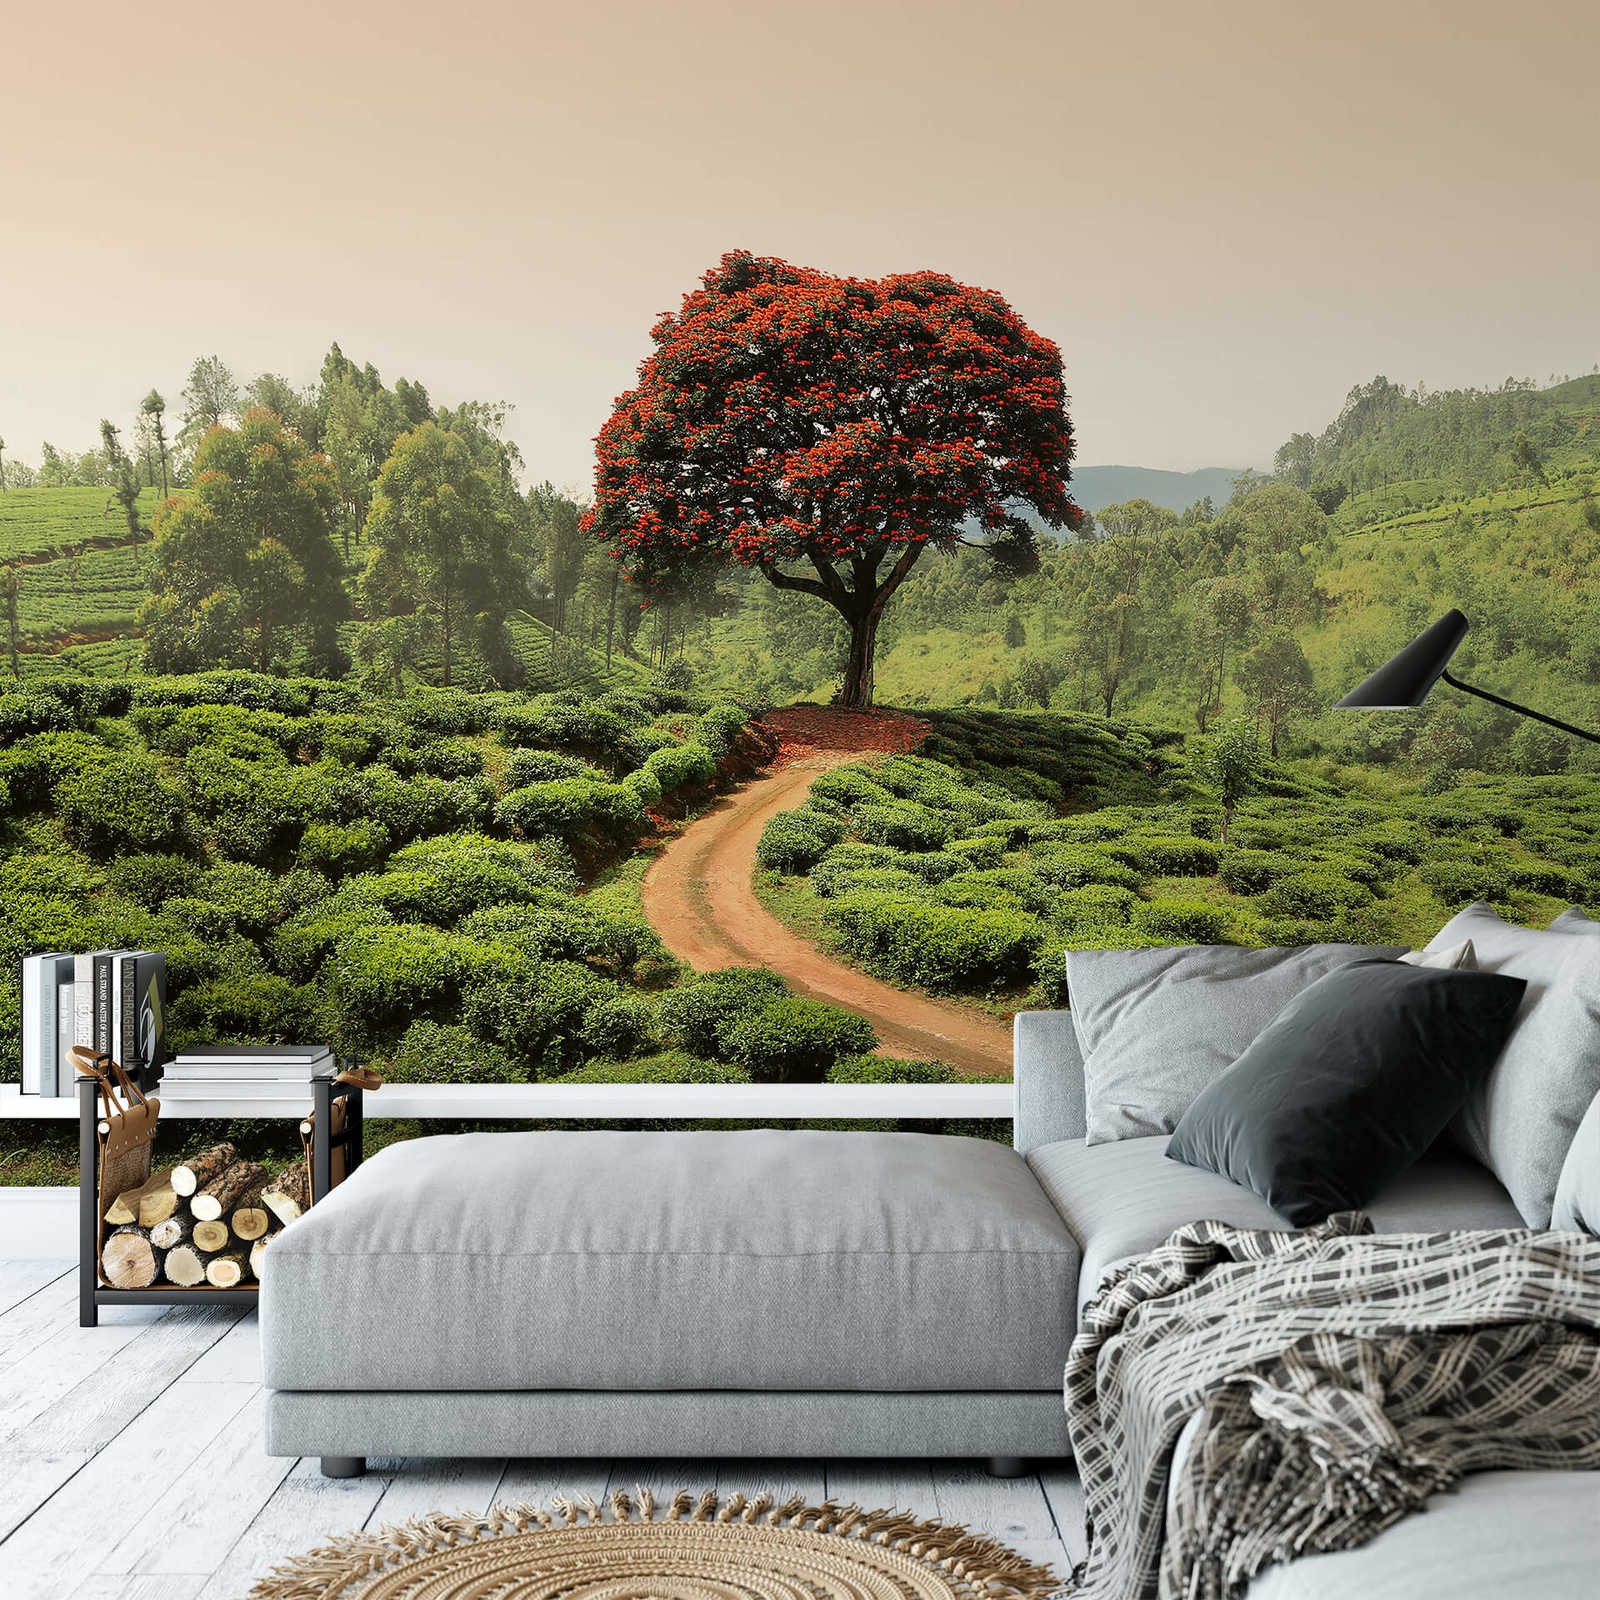             Photo wallpaper landscape in Sri Lanka - green, red, brown
        